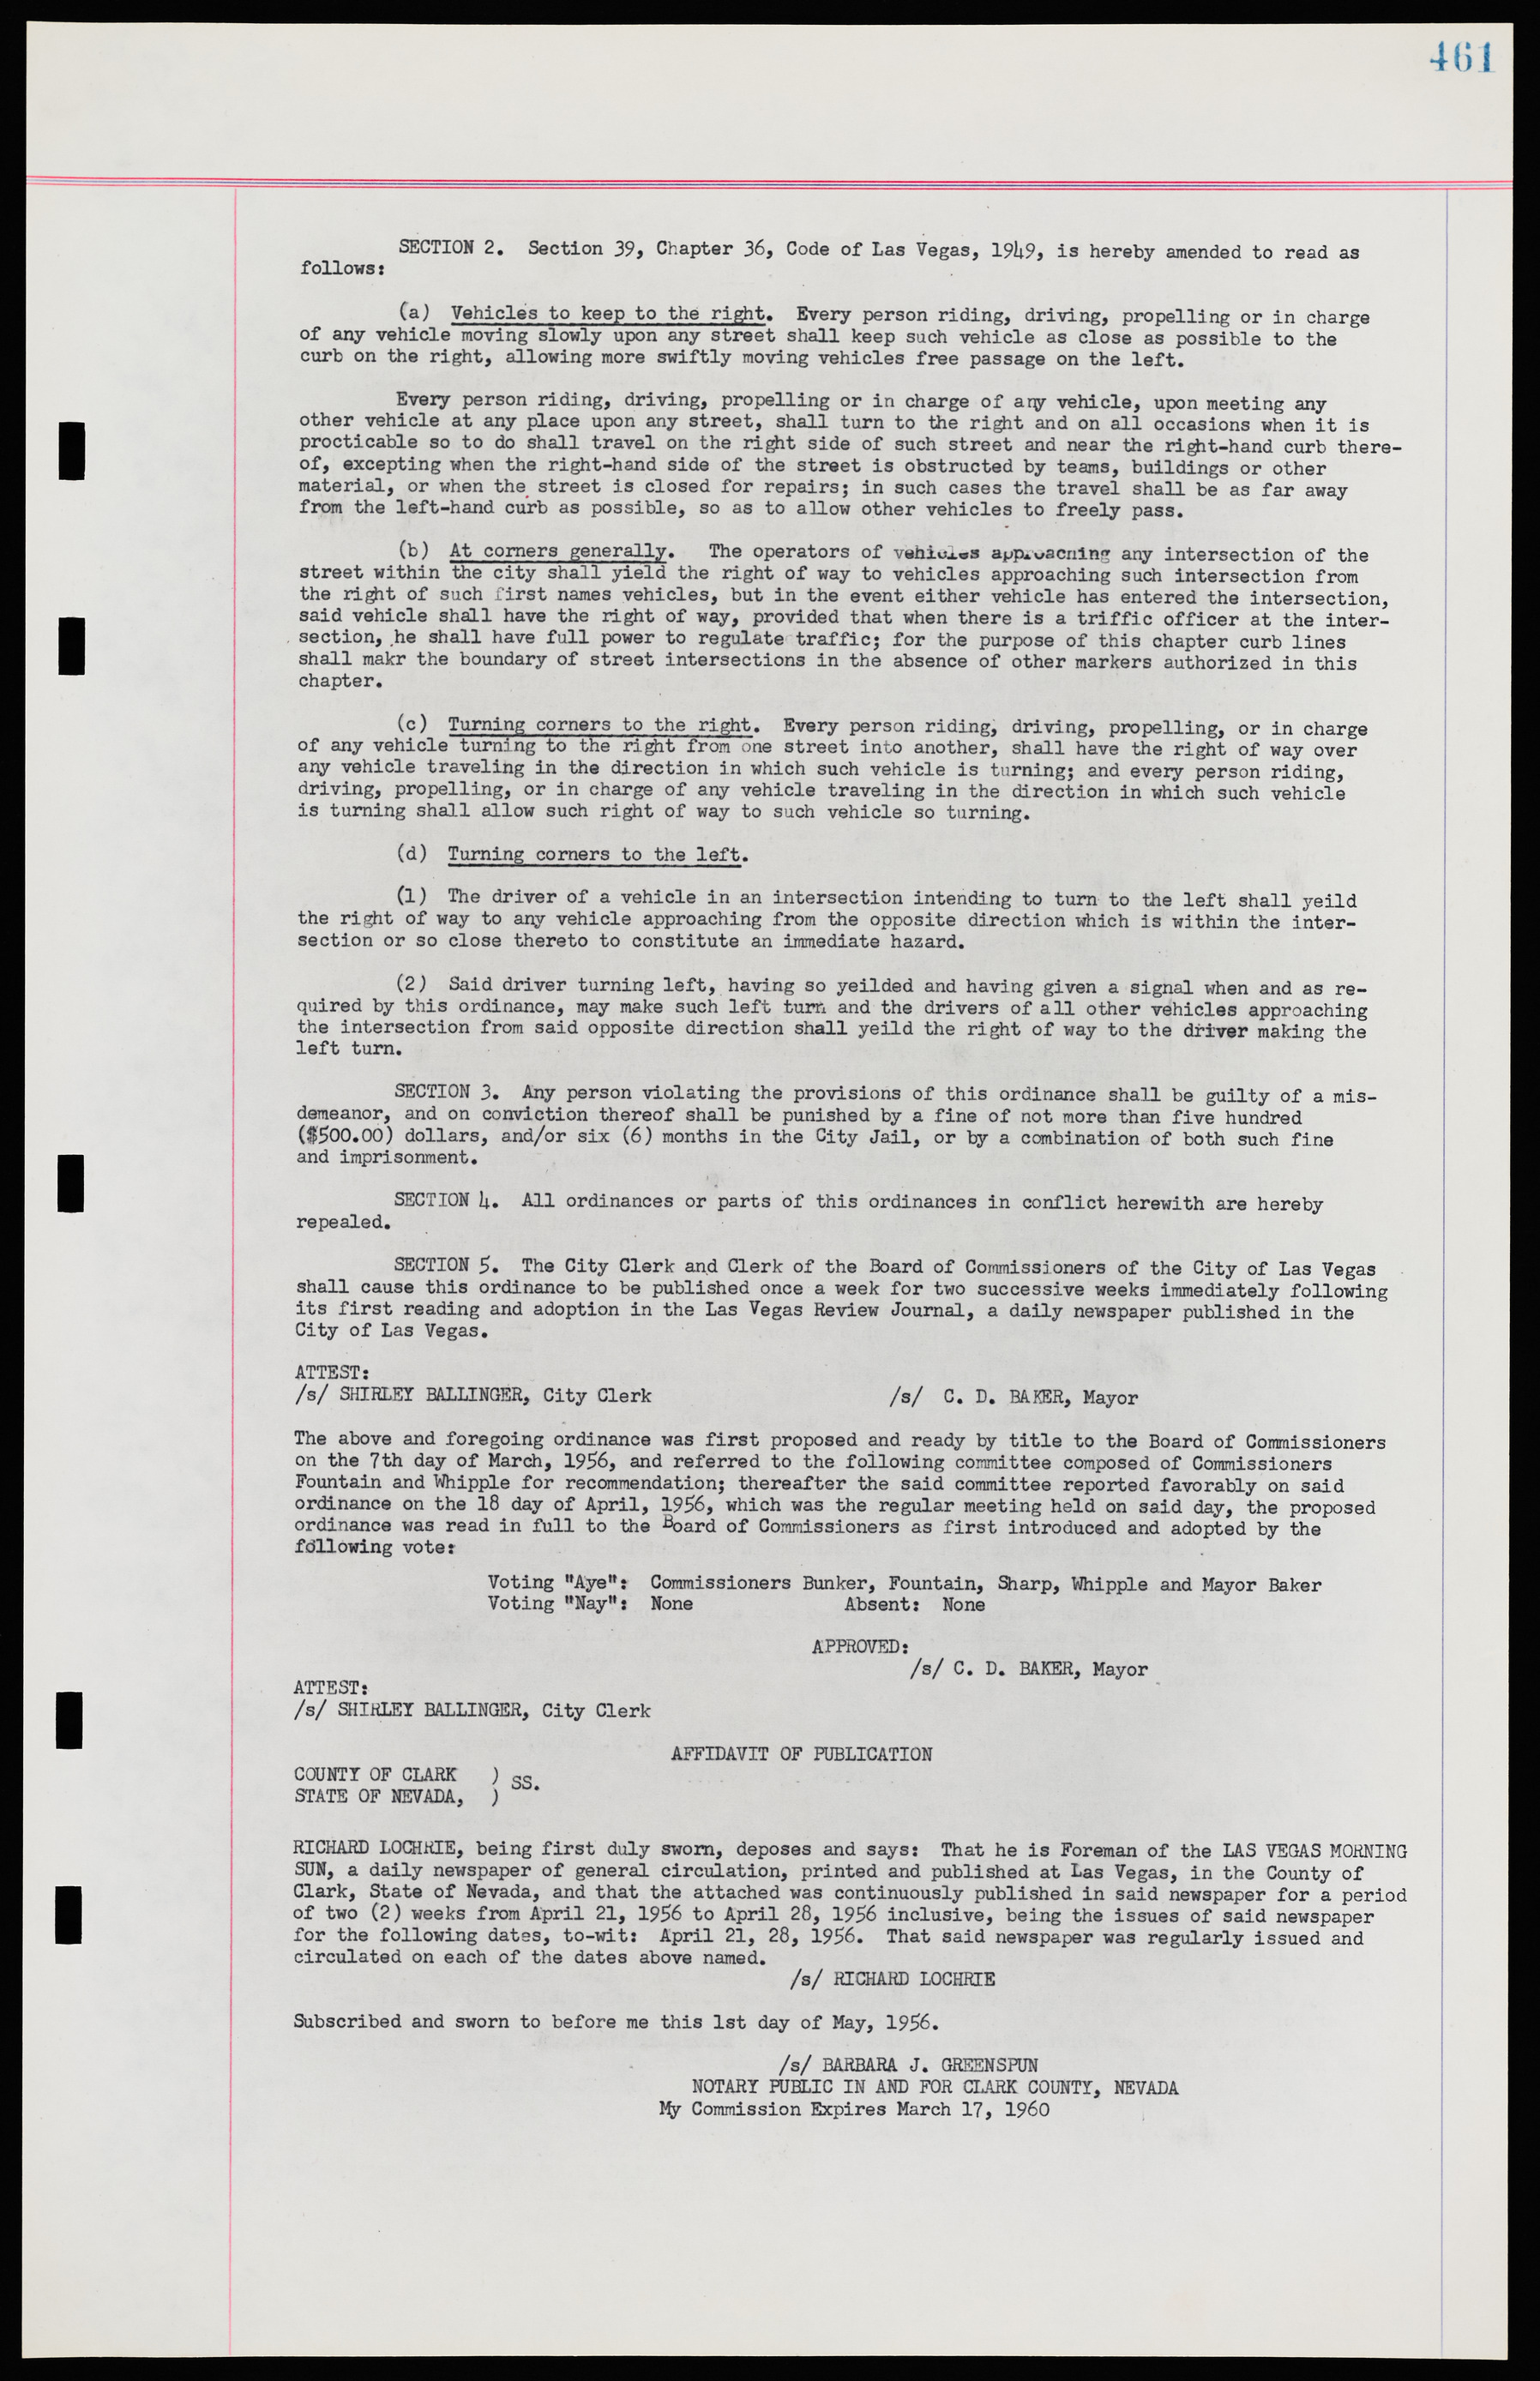 Las Vegas City Ordinances, November 13, 1950 to August 6, 1958, lvc000015-469